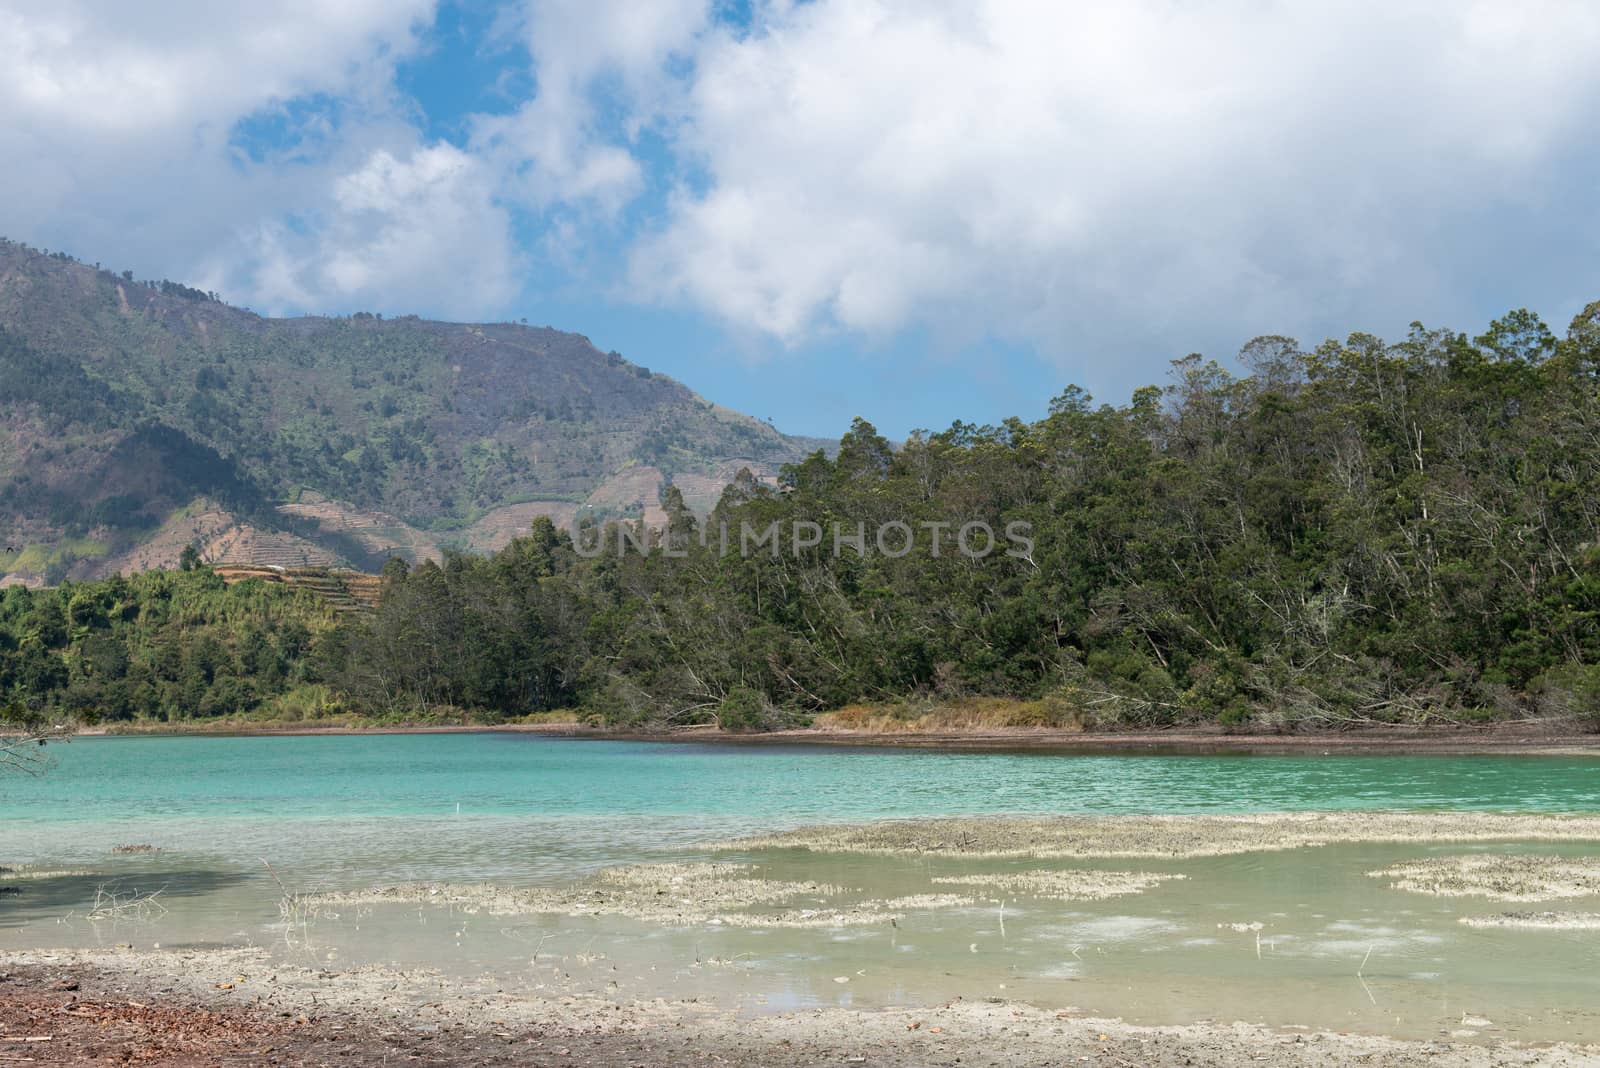 Volcanic colorful lake (Telaga Warna) on Dieng plateau, Java, Indonesia